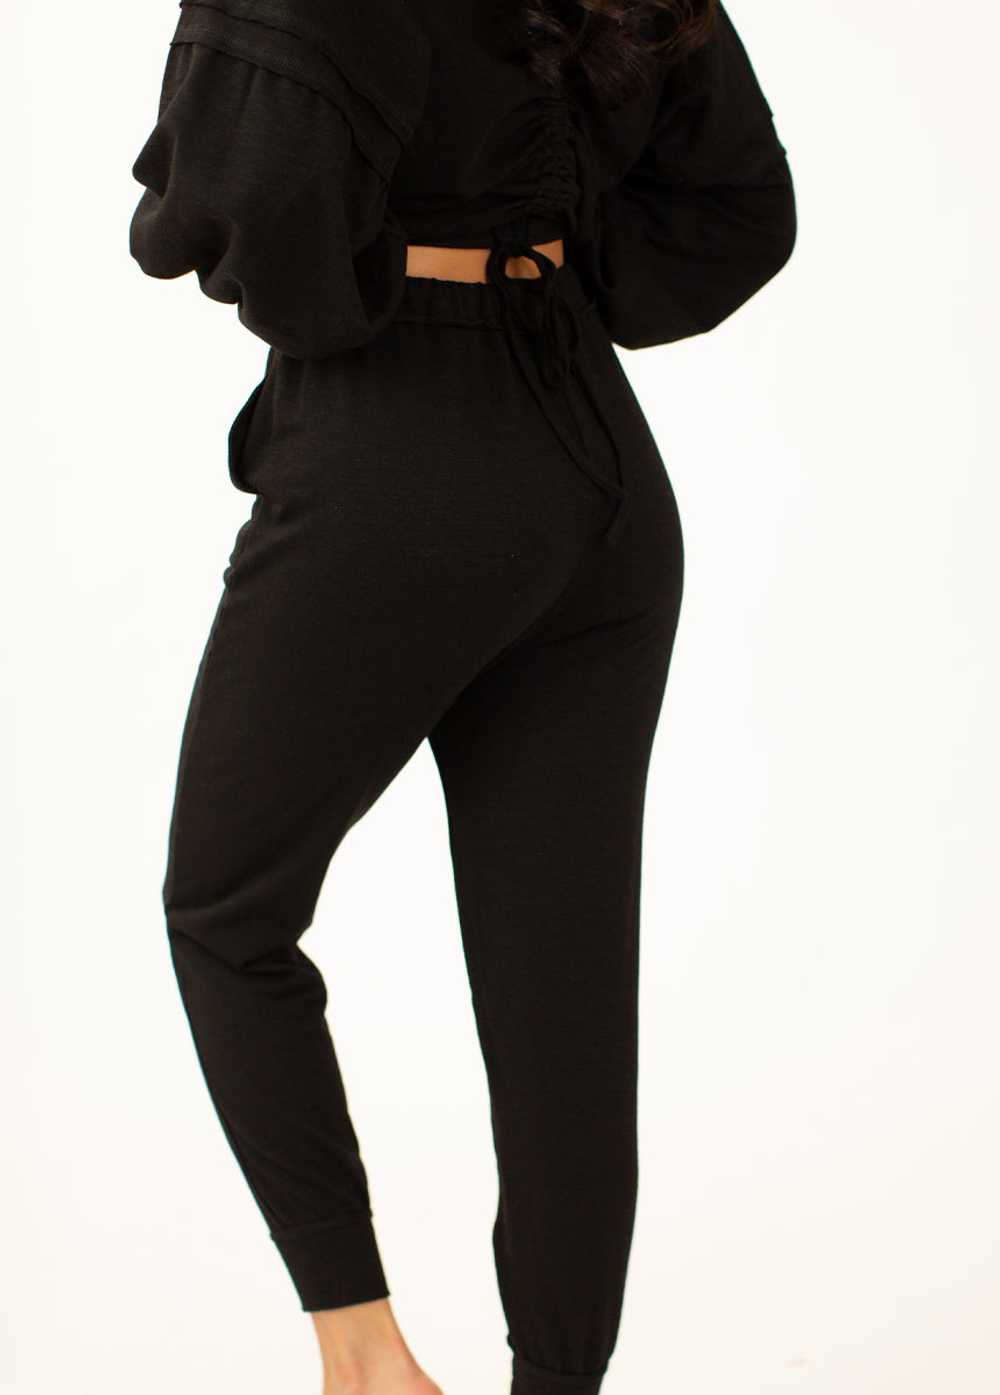 Joyfolie Luna Sweatpants in Black - image 4